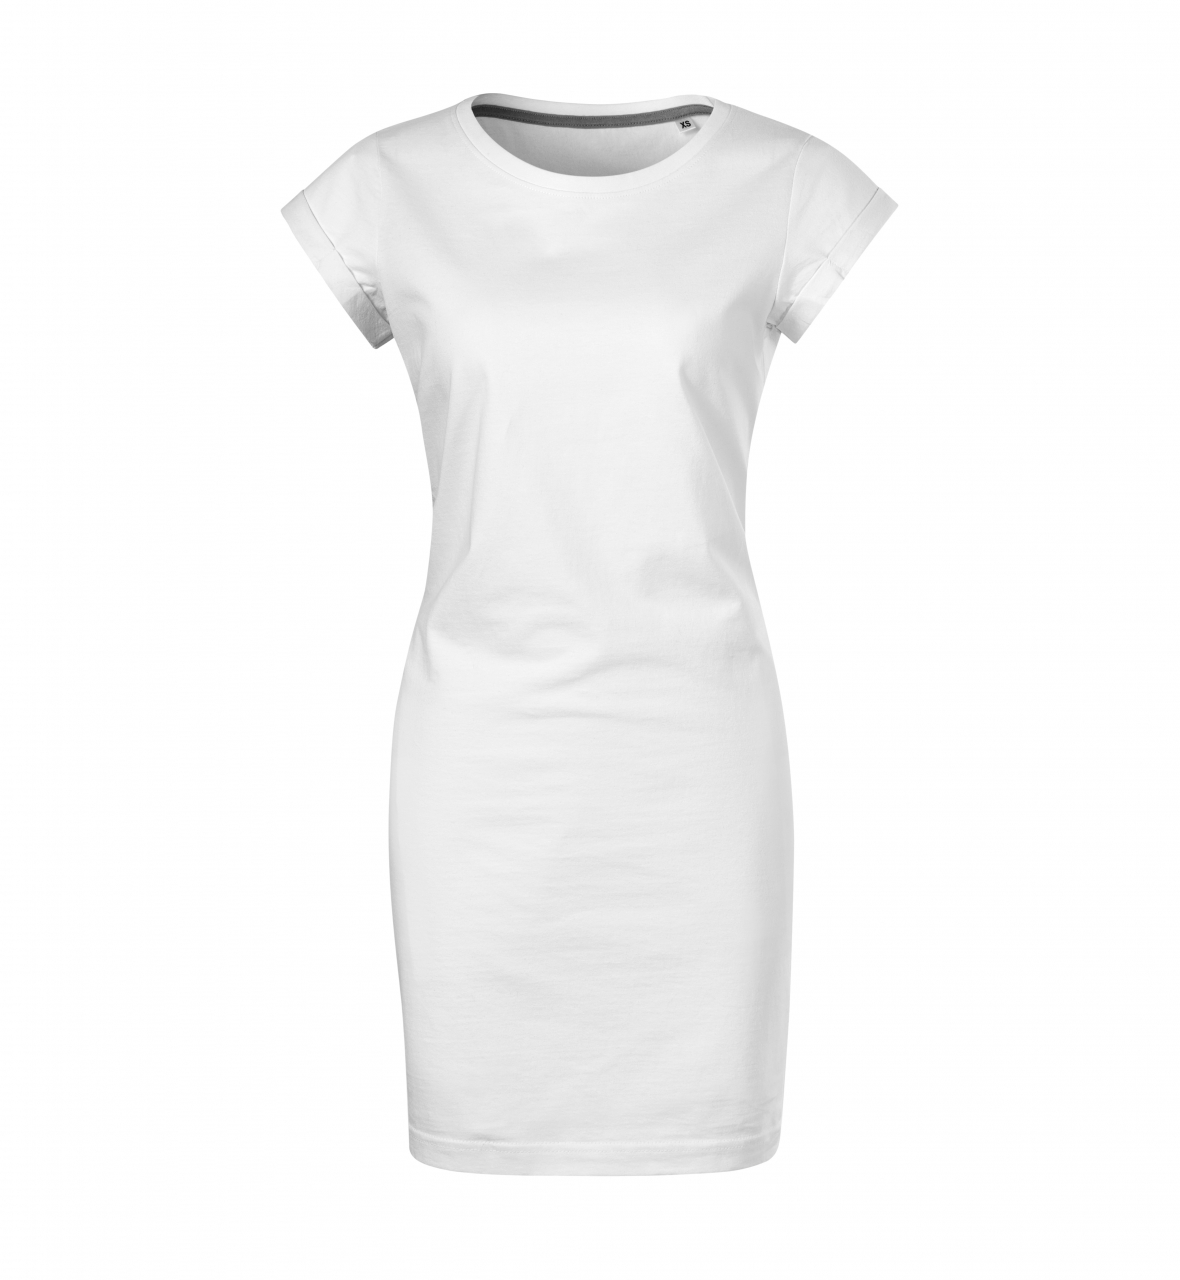 Šaty dámské Malfini Freedom - bílé, XL